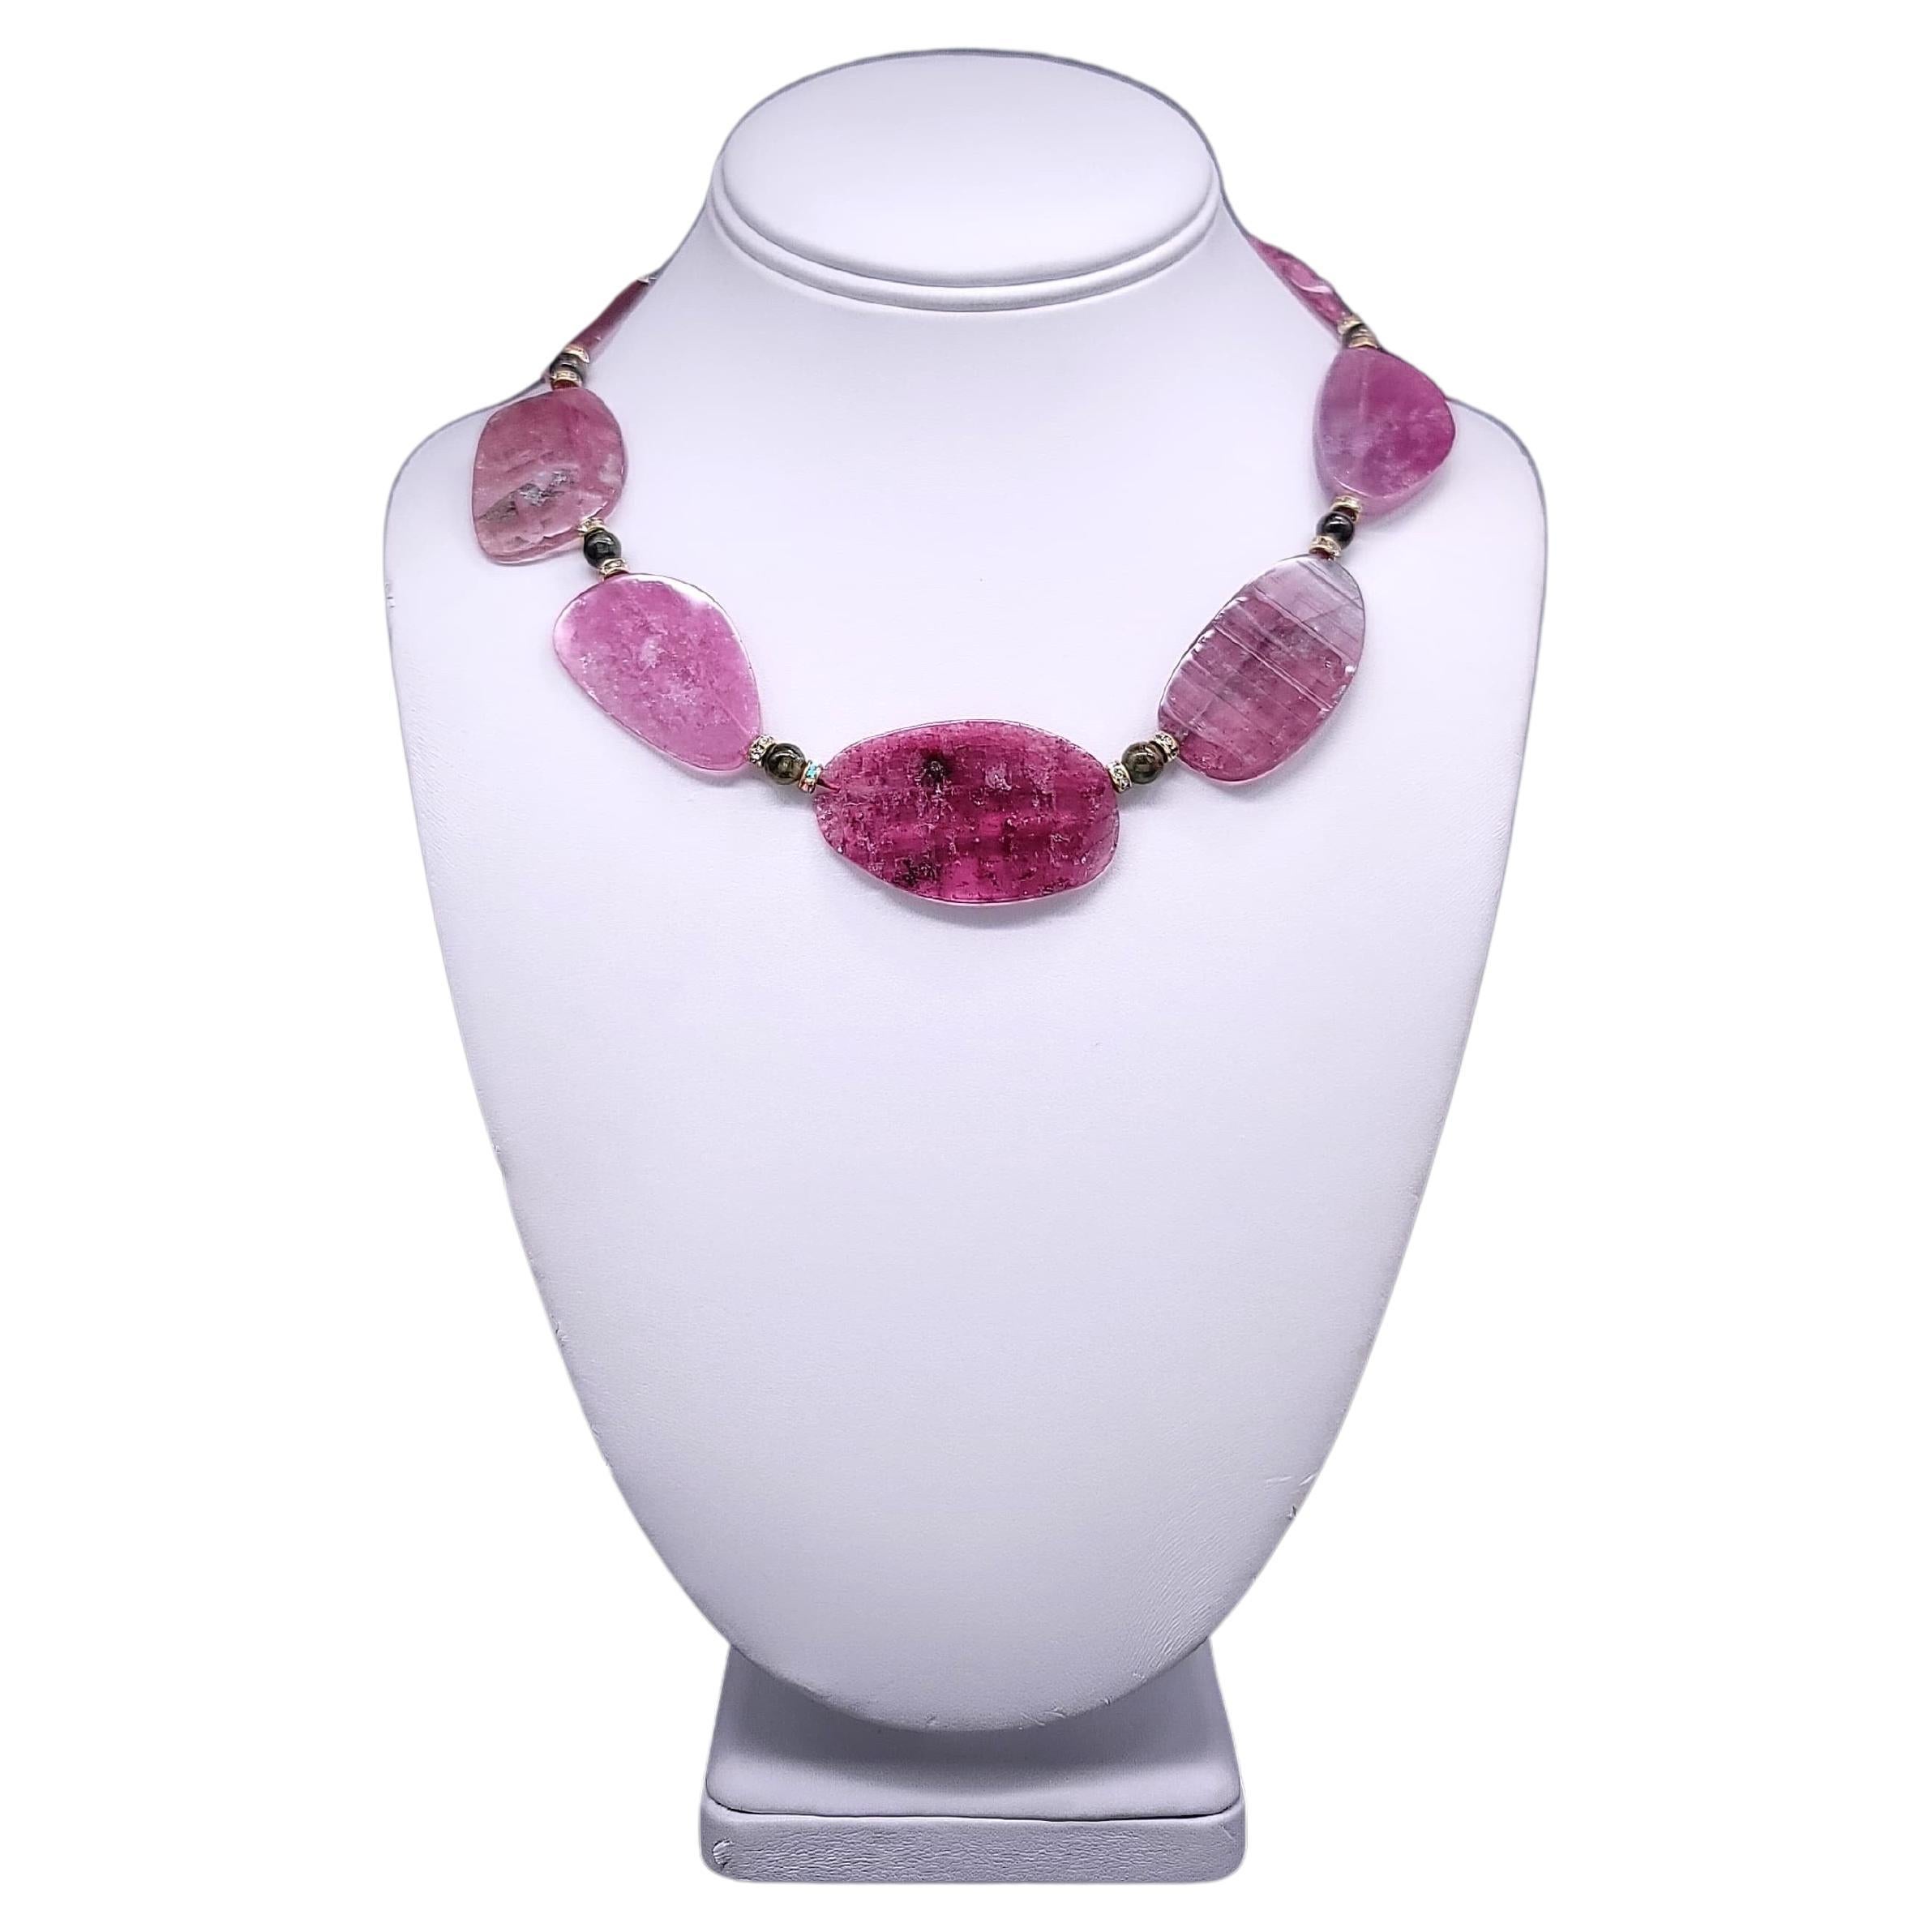 A.Jeschel sliced Pink Tourmaline Necklace. For Sale